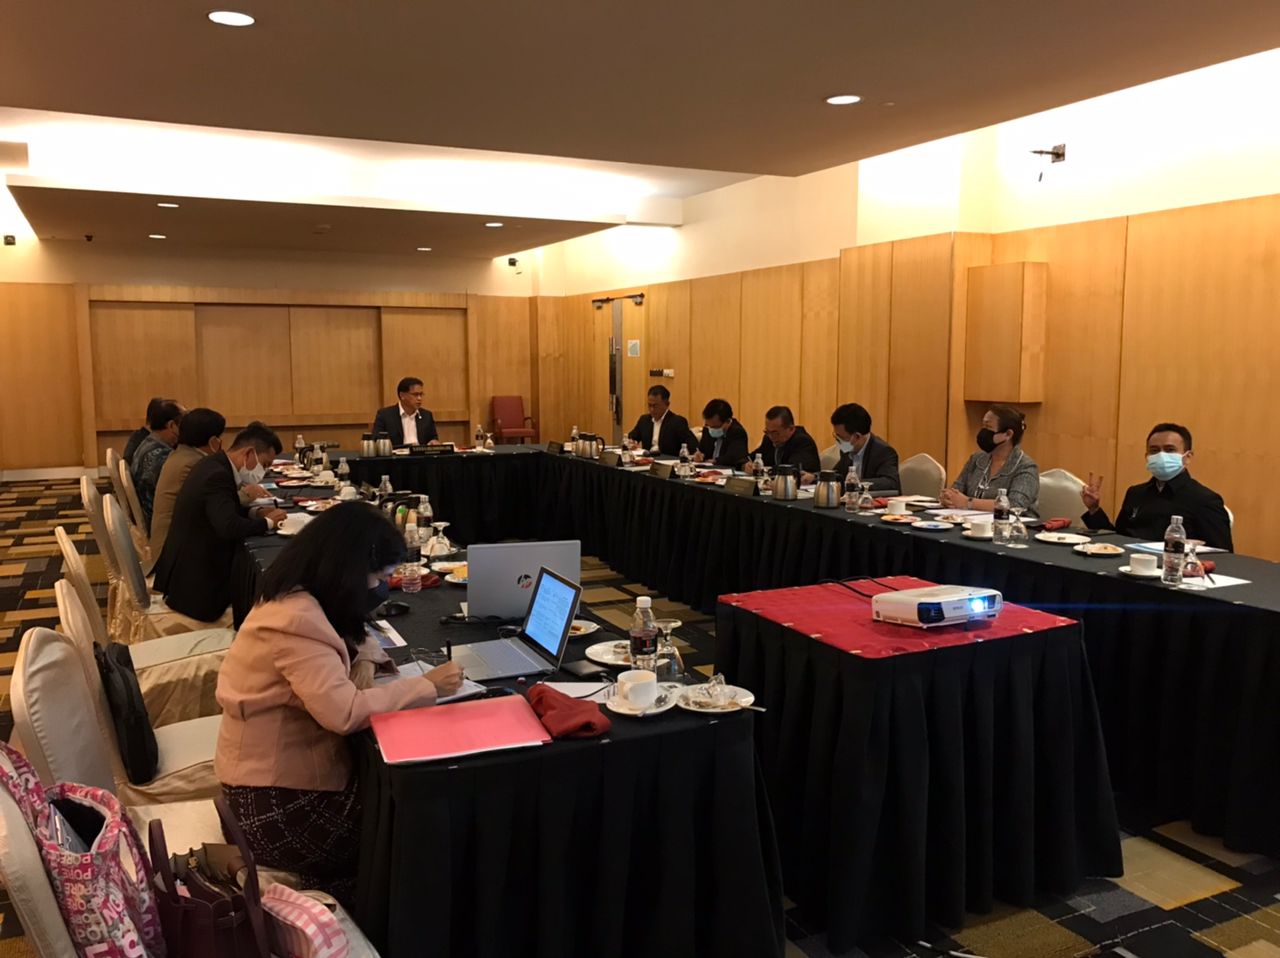 PPNS’ Board of Directors Meeting 2/2022